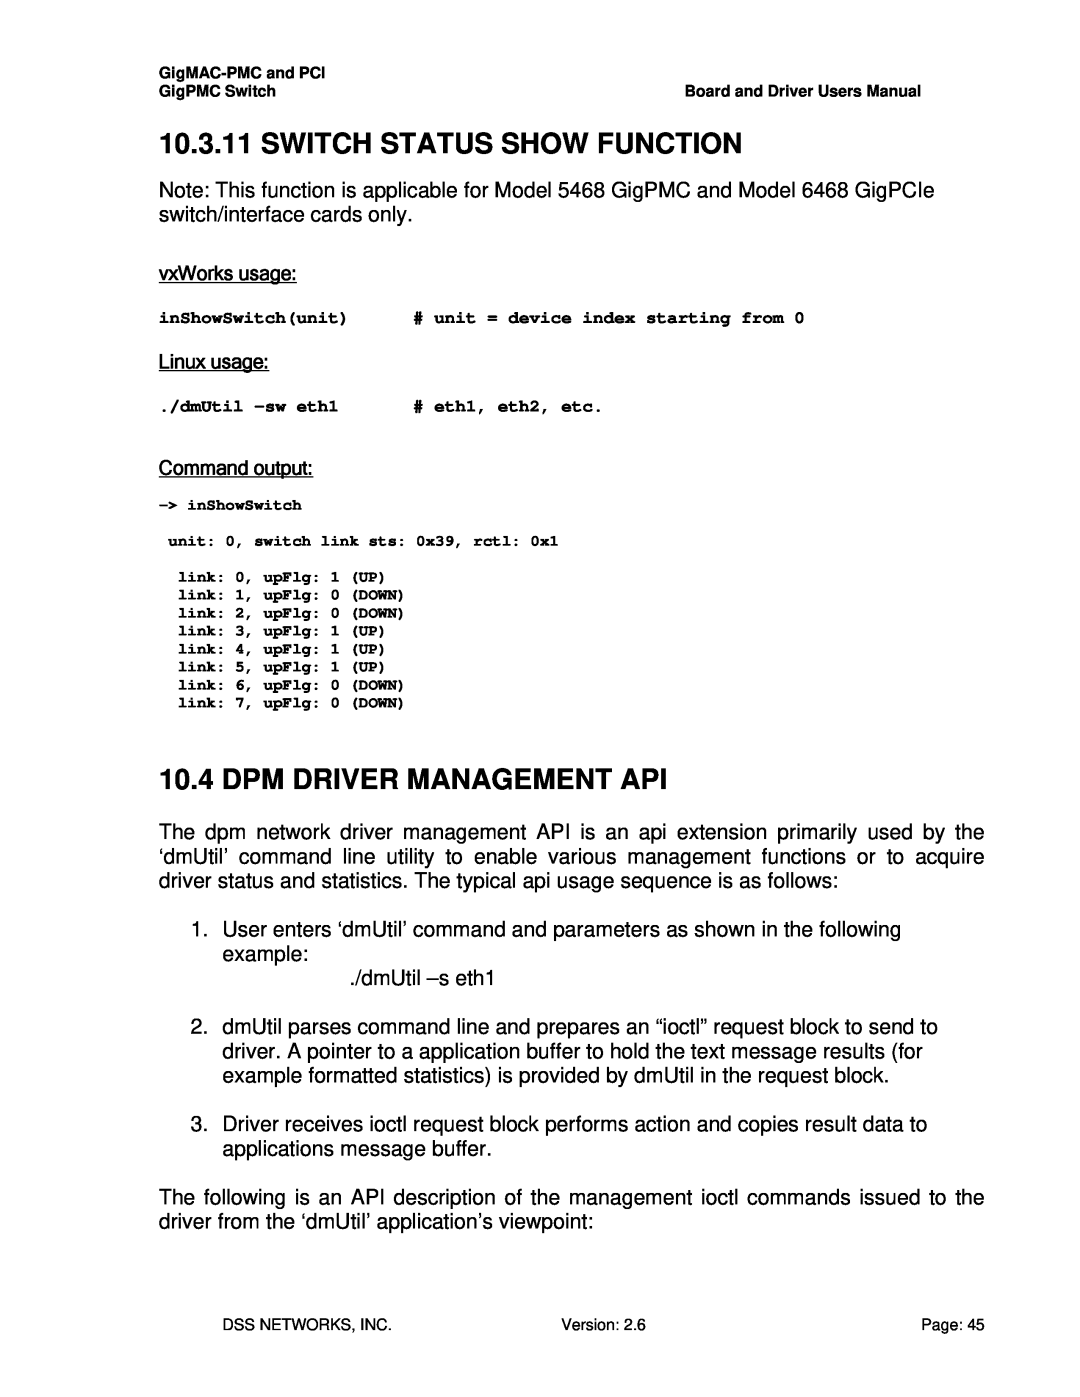 Intel PCI-X user manual Switch Status Show Function, Dpm Driver Management Api 